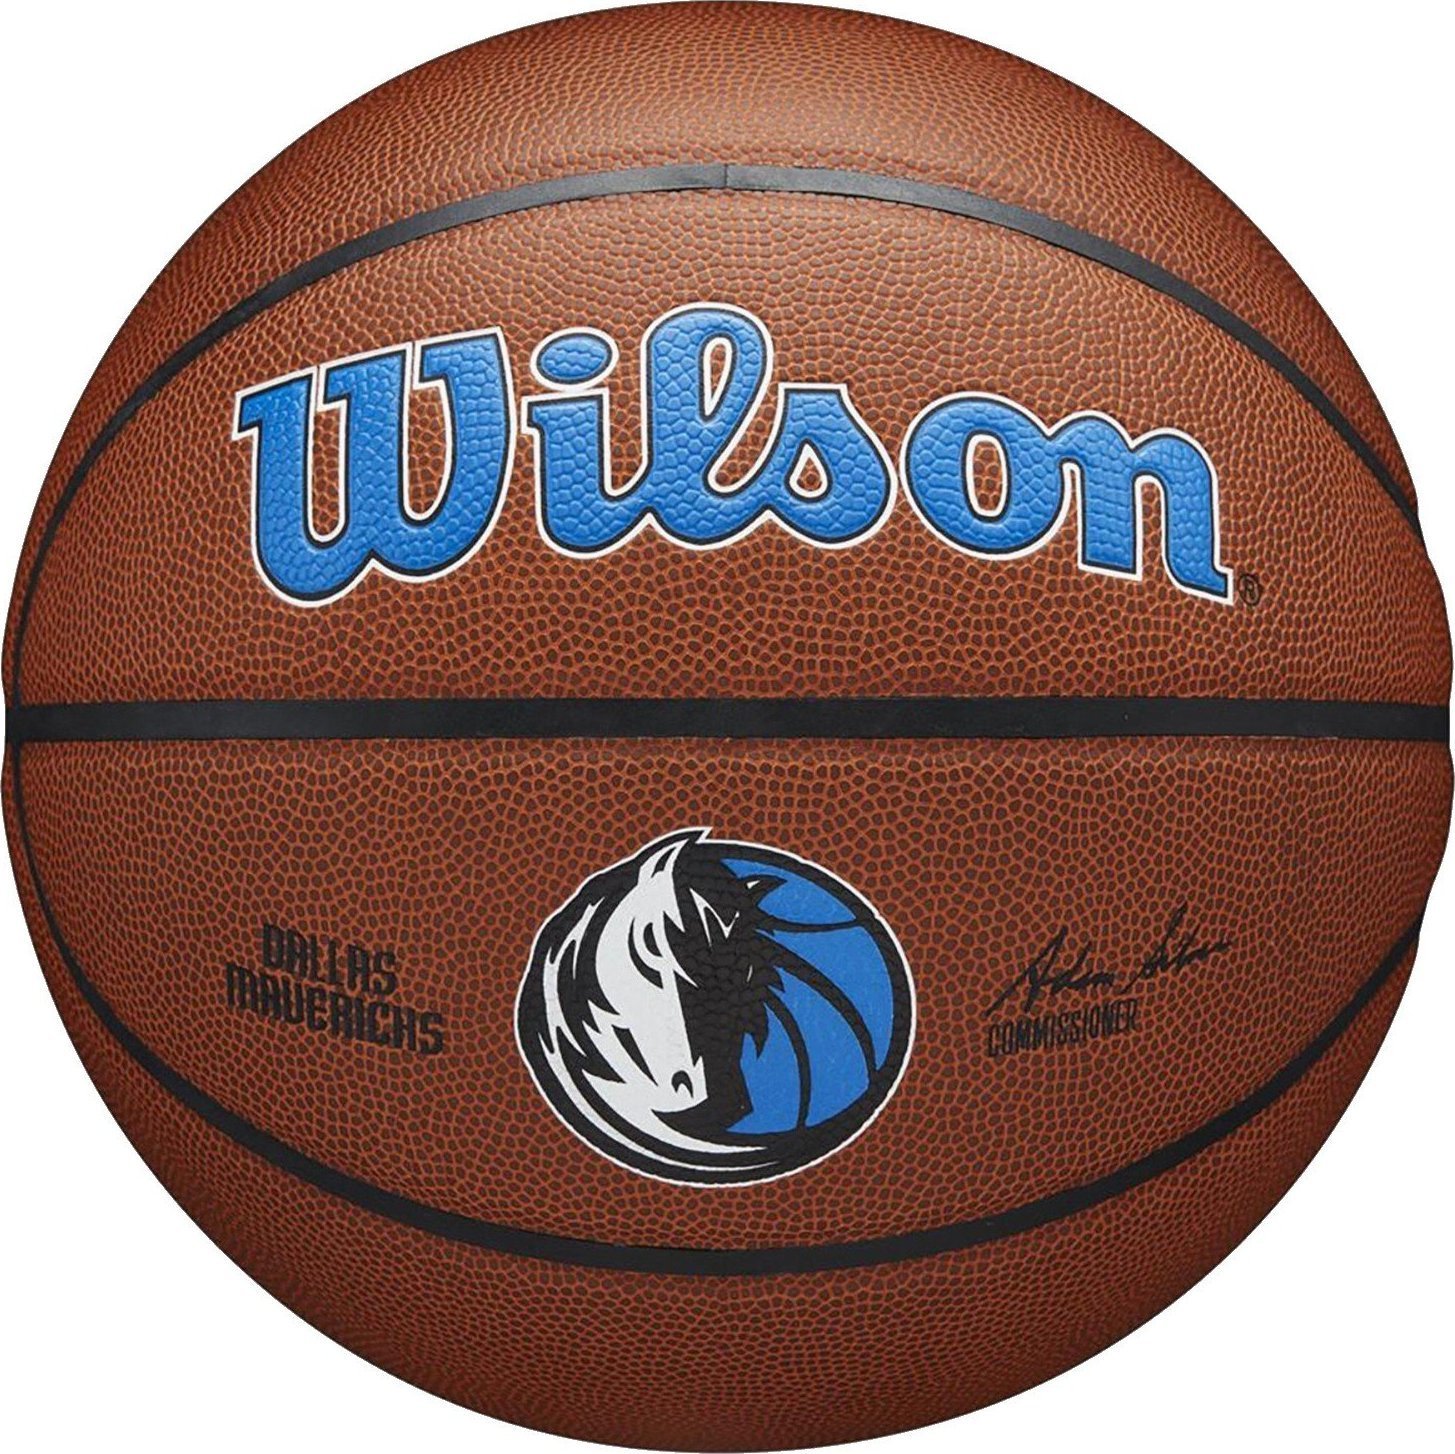 Minge baschet Wilson NBA Team Alliance Dallas Mavericks, marime 7